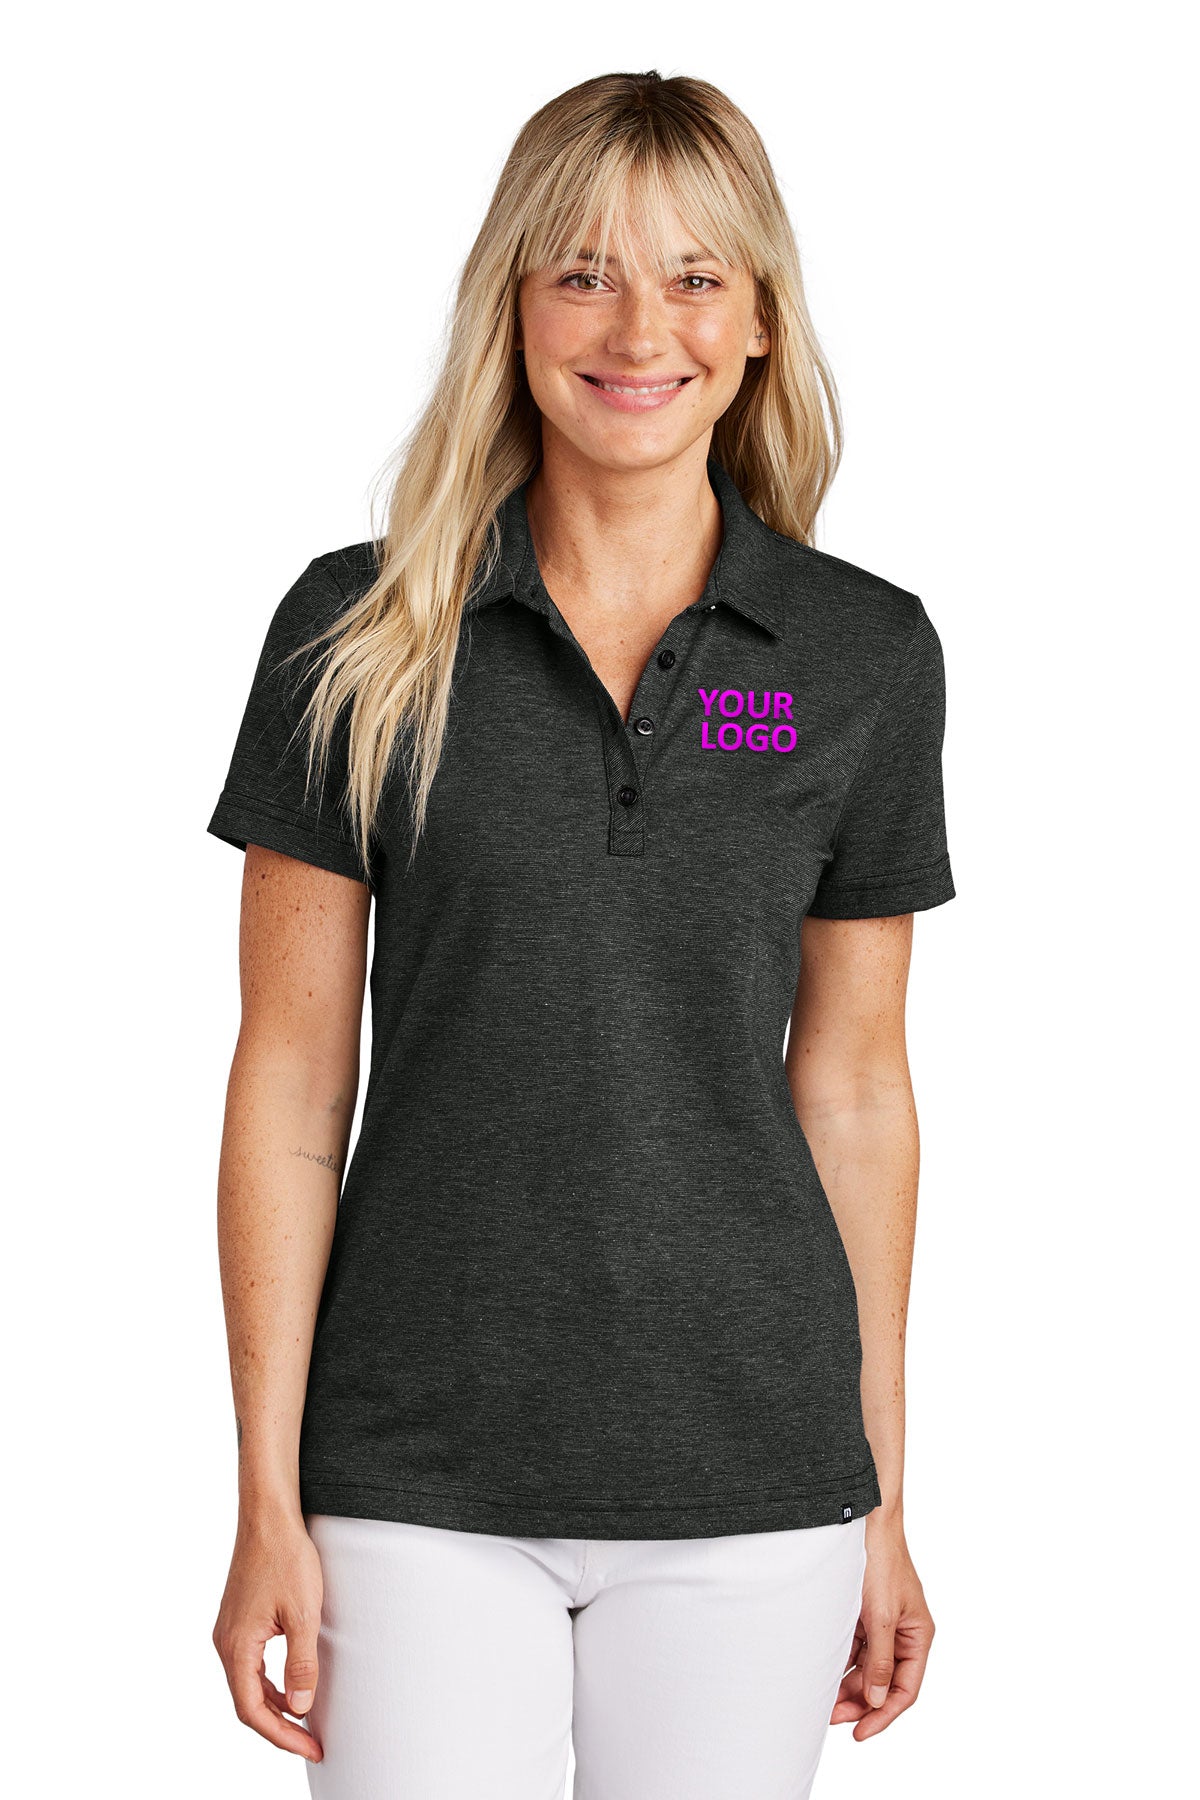 TravisMathew Black Heather TM1LD005 custom polo shirts with logo